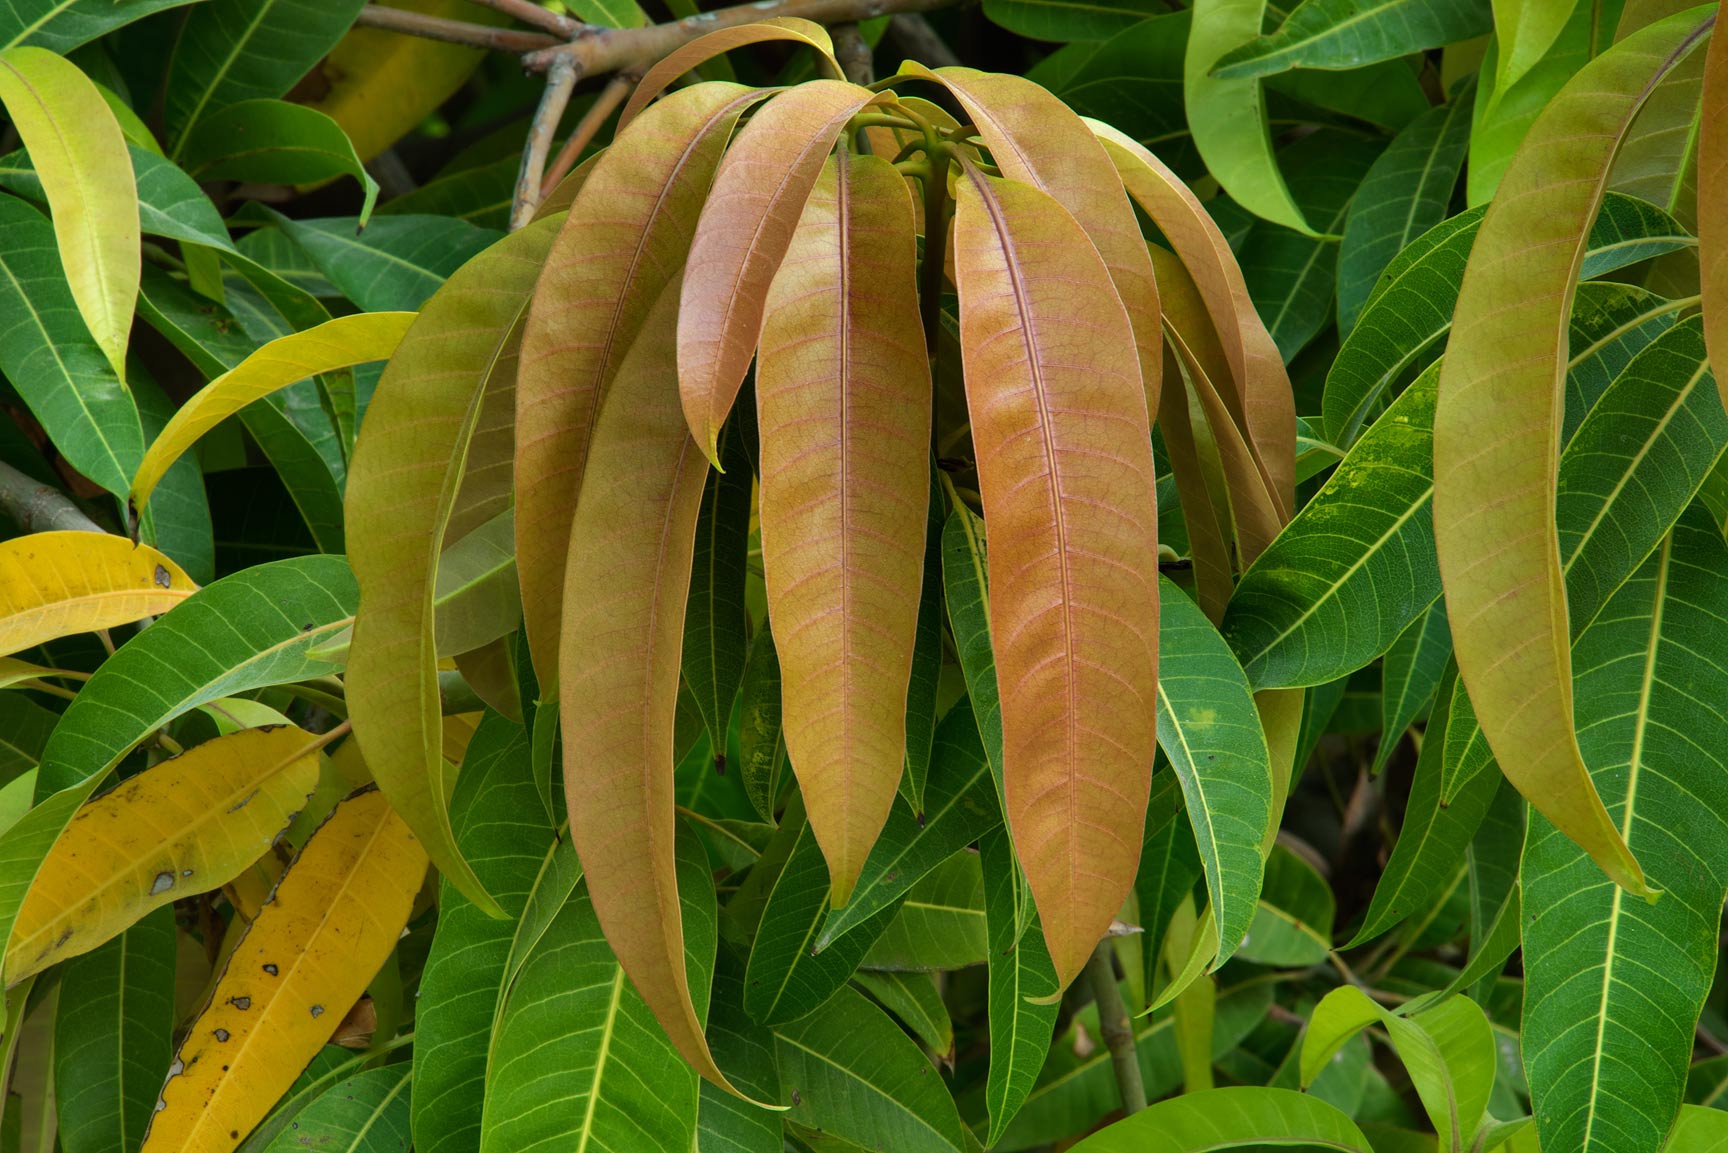 Host mango. Манго индийское дерево. Mangifera Indica дерево. Тайское манго дерево. Манговое дерево в Индии.